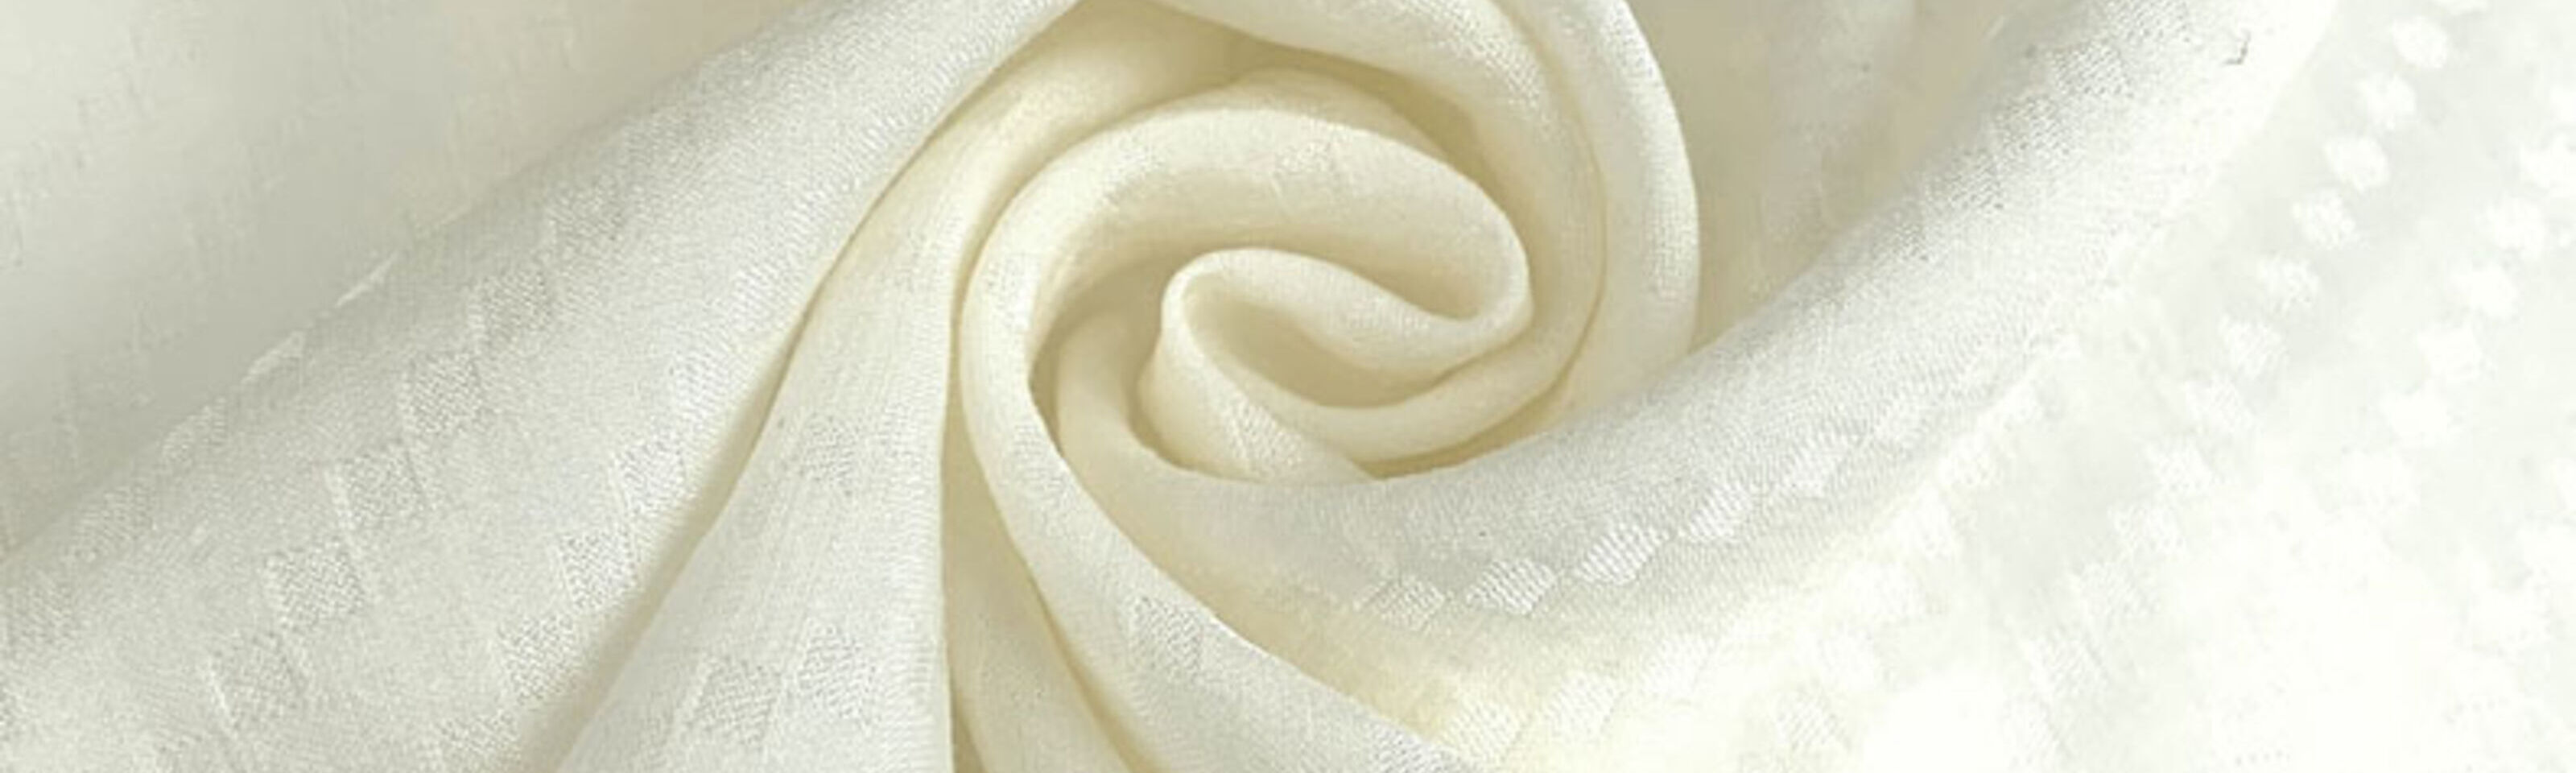 Athena - Cream Squares Woven Wool Silk Mix Dress Blouse Fabric - Close Up Drape Fabric Photo